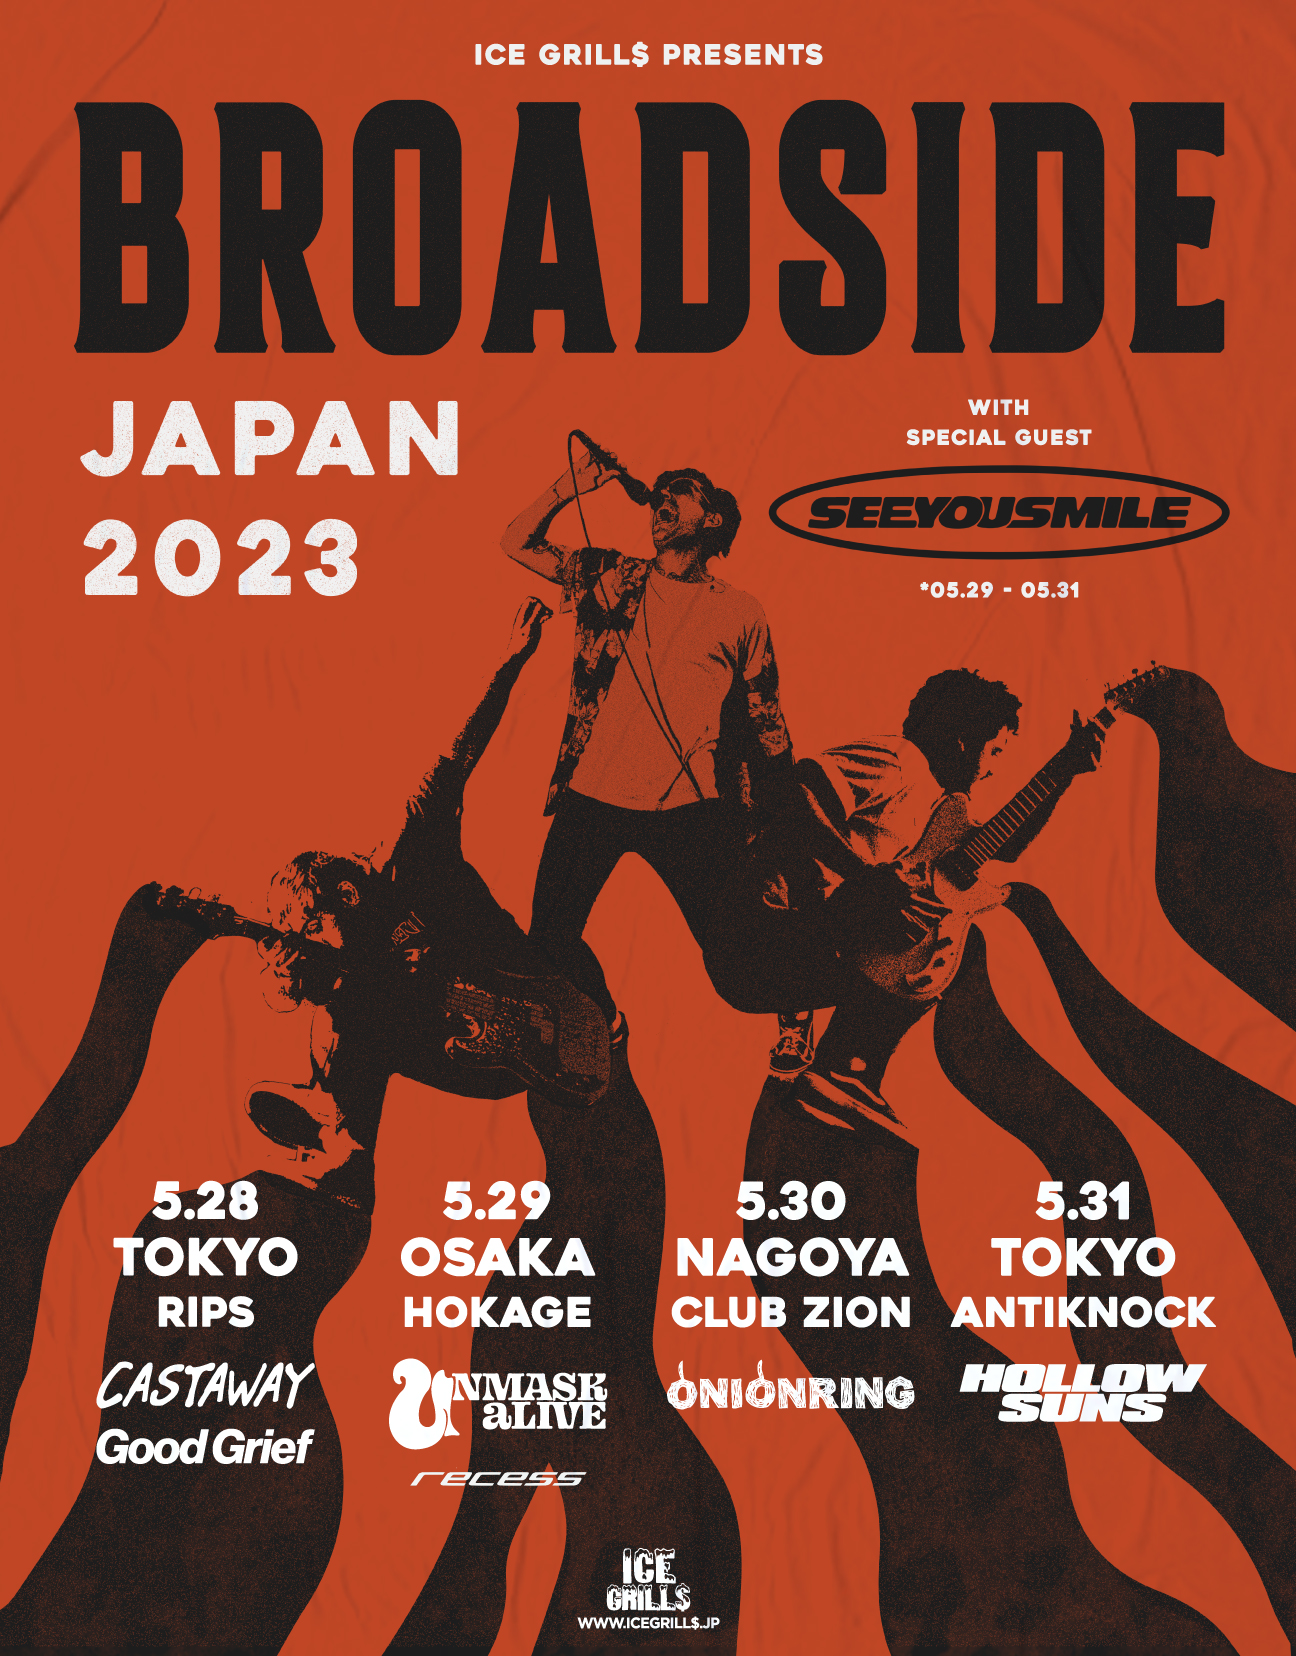 Broadside – Japan Tour updated